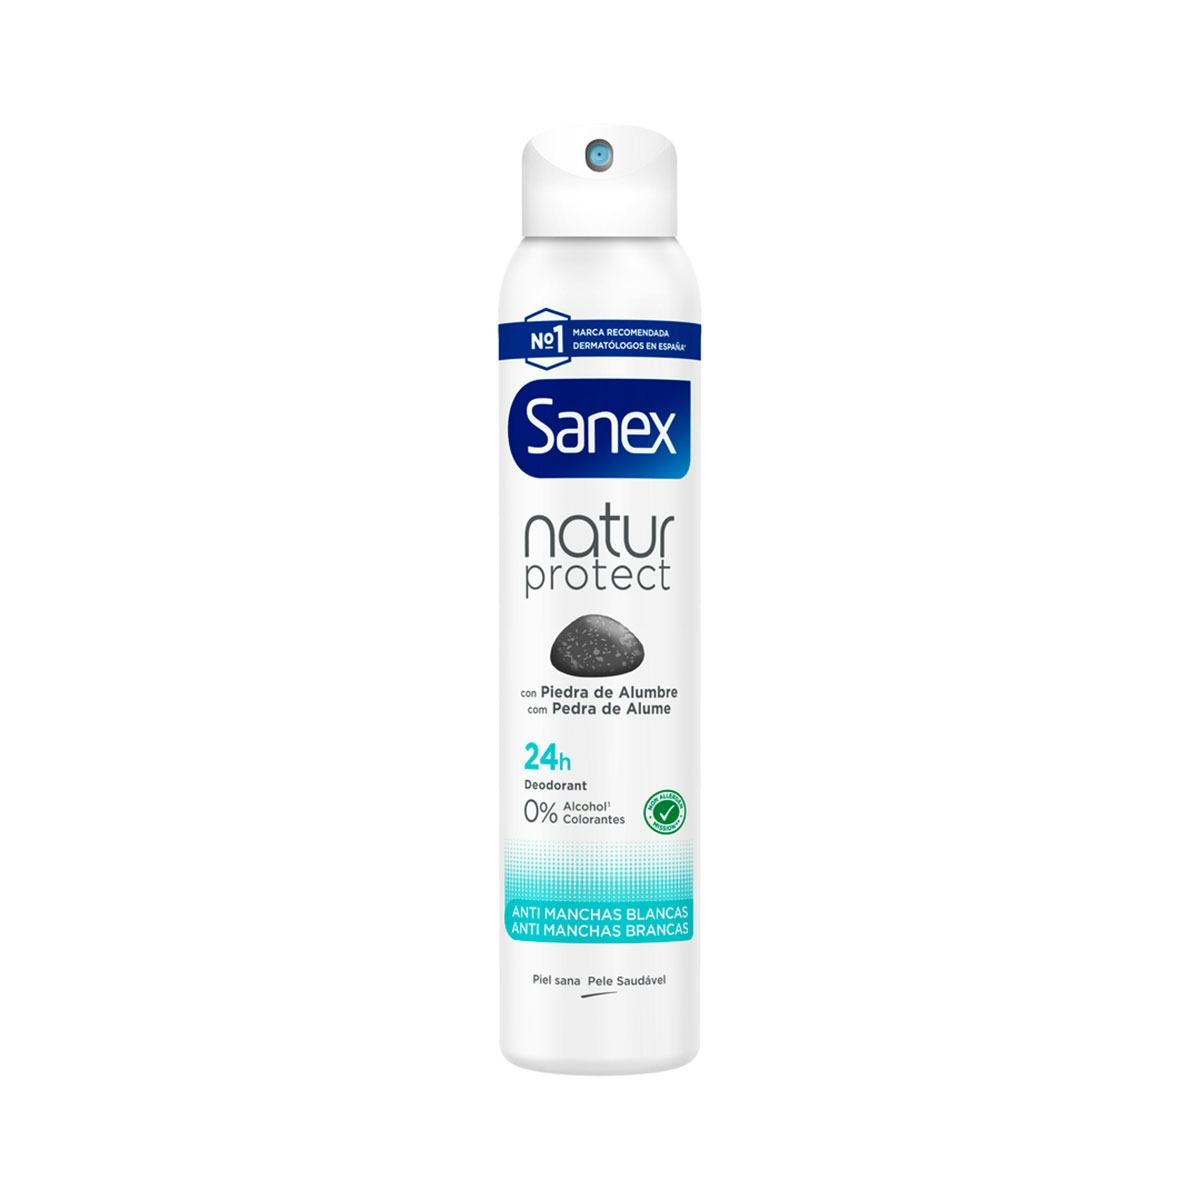 Desodorante spray Sanex Natur Protect 24h anti-manchas blancas con piedra de alumbre 200ml